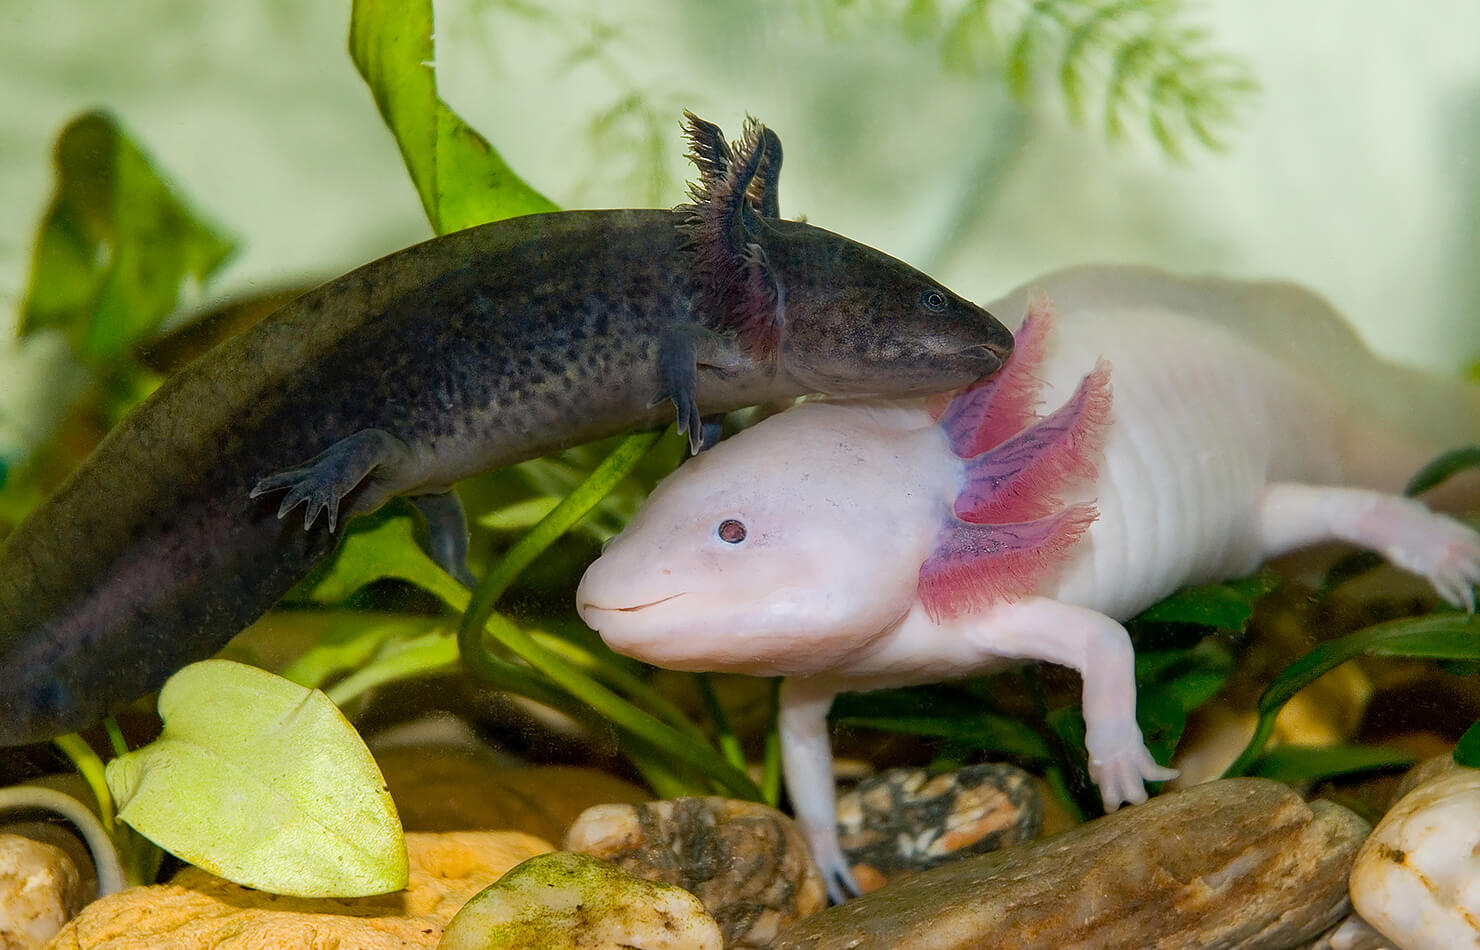 A pair of axolotl